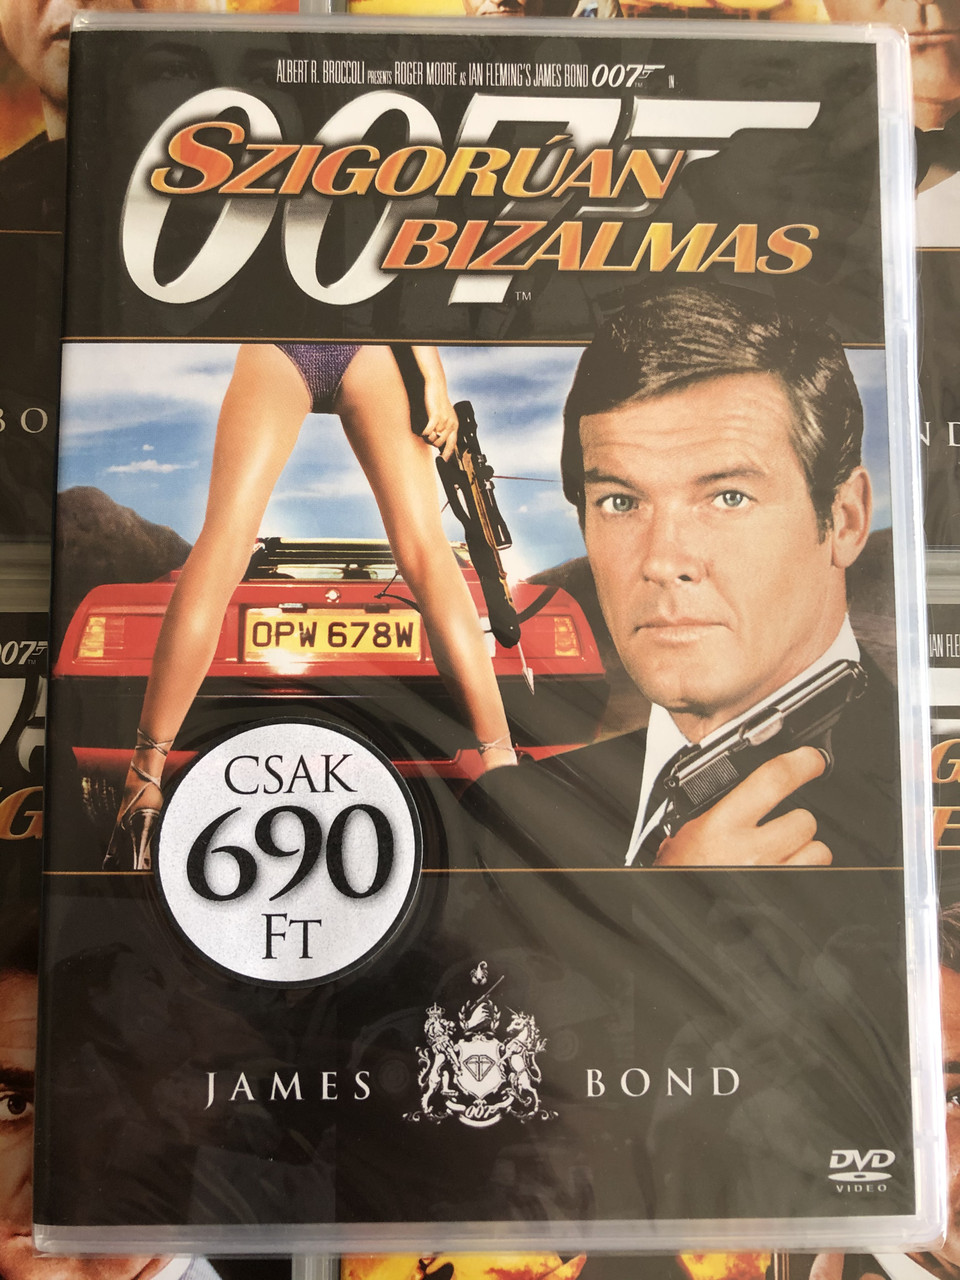 James Bond 007 - For your eyes only DVD 1981 James Bond - Szigorúan  bizalmas / Directed by John Glen / Starring: Roger Moore, Carole Bouquet,  Topol, Lynn Holly - bibleinmylanguage